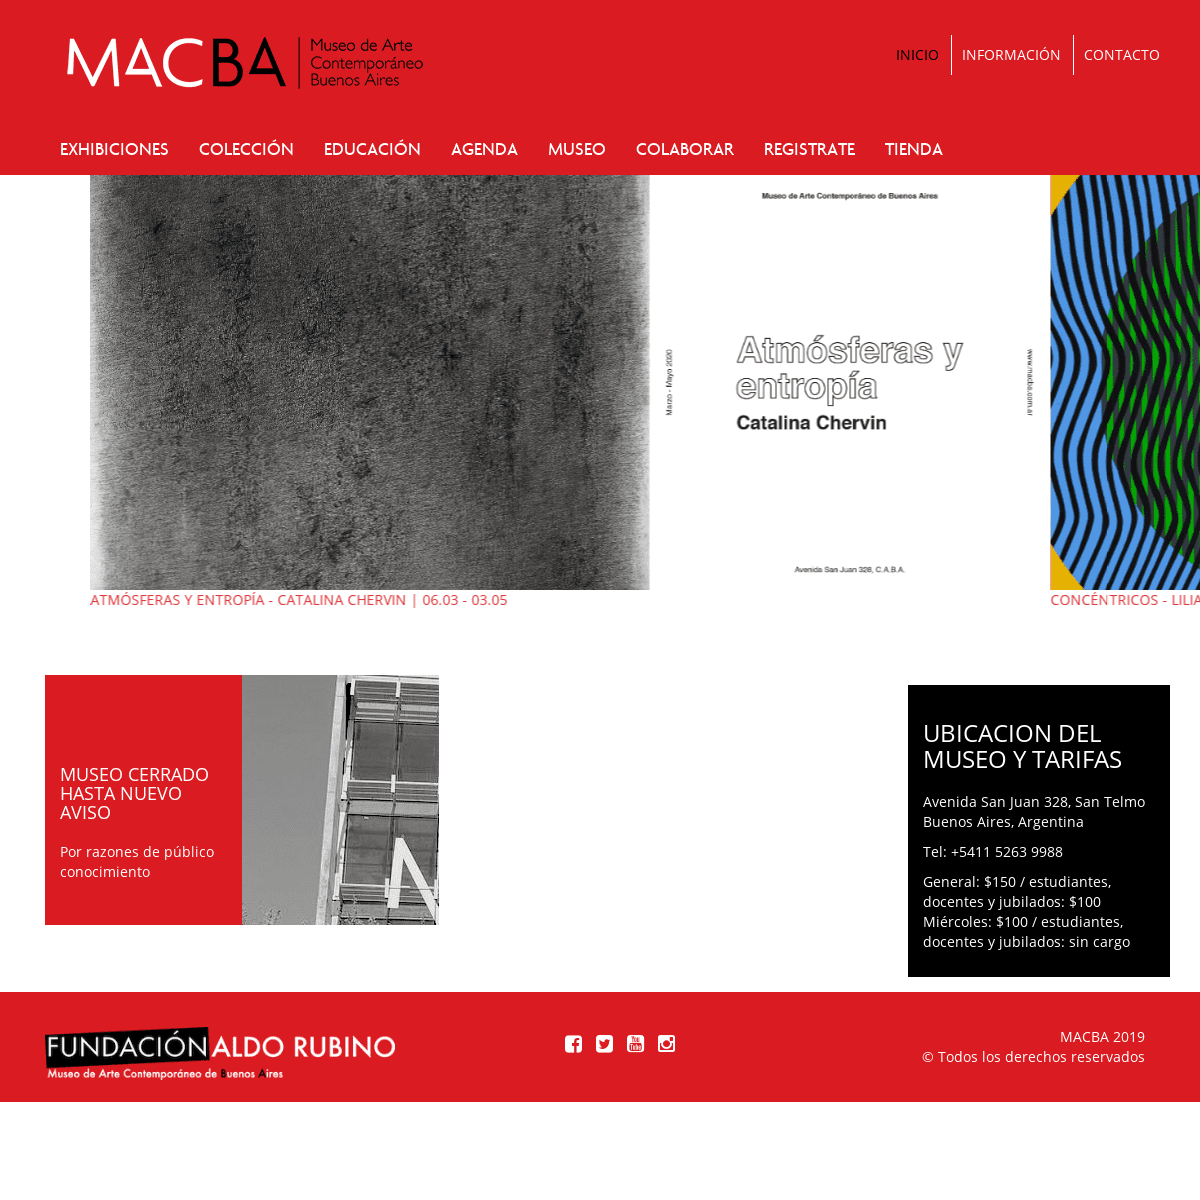 A complete backup of macba.com.ar